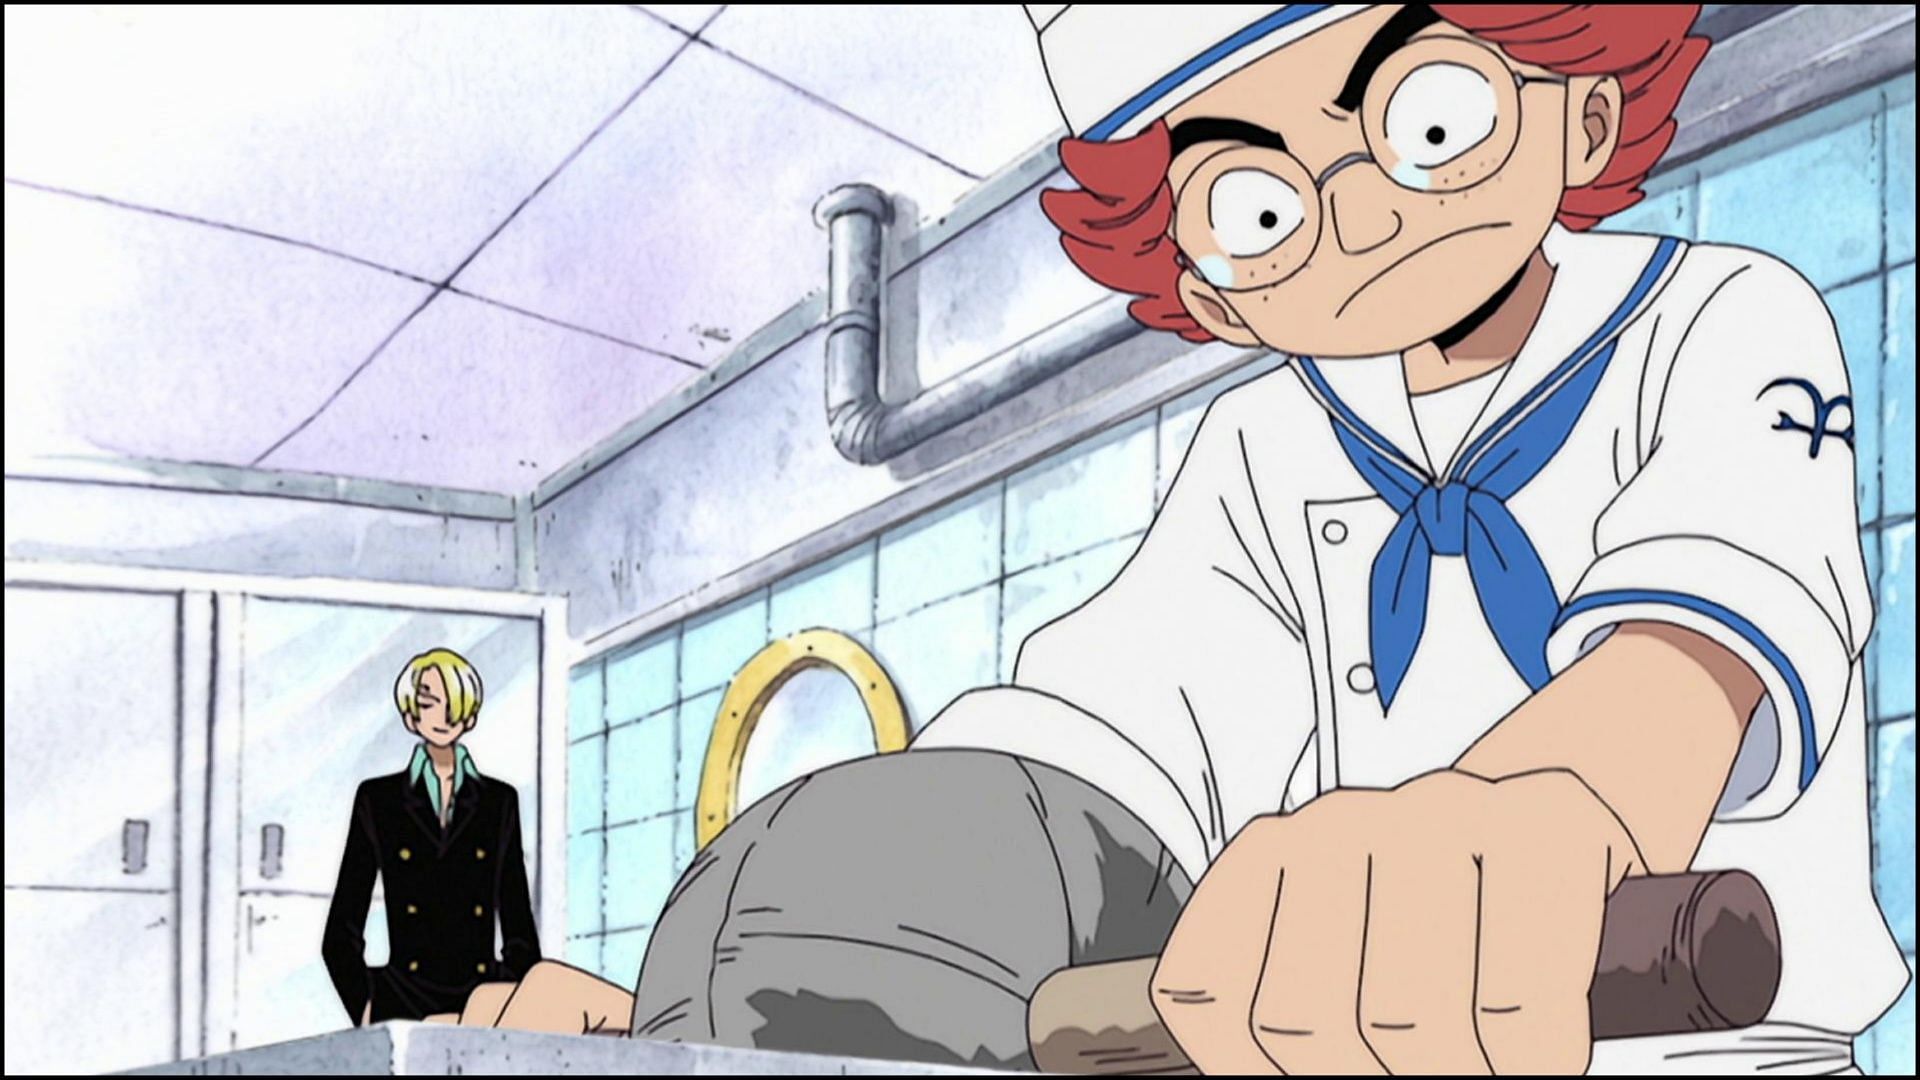 Toei Animation copyright strike Uncle Roger over One Piece anime infringement (Image via Toei Animation)